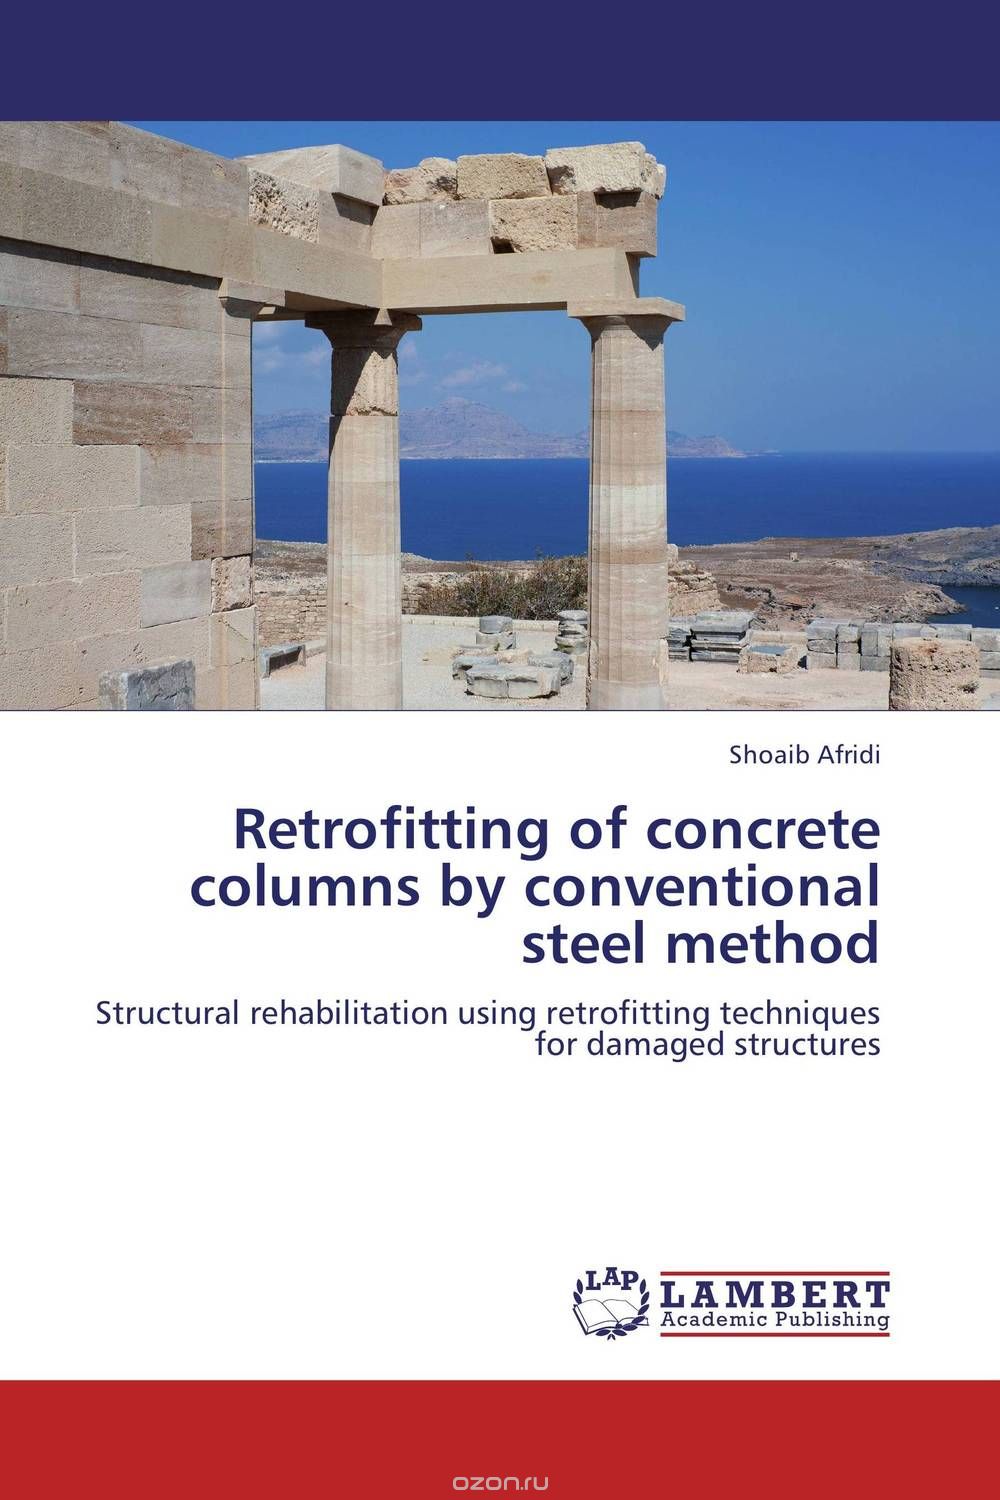 Скачать книгу "Retrofitting of concrete columns by conventional steel method"